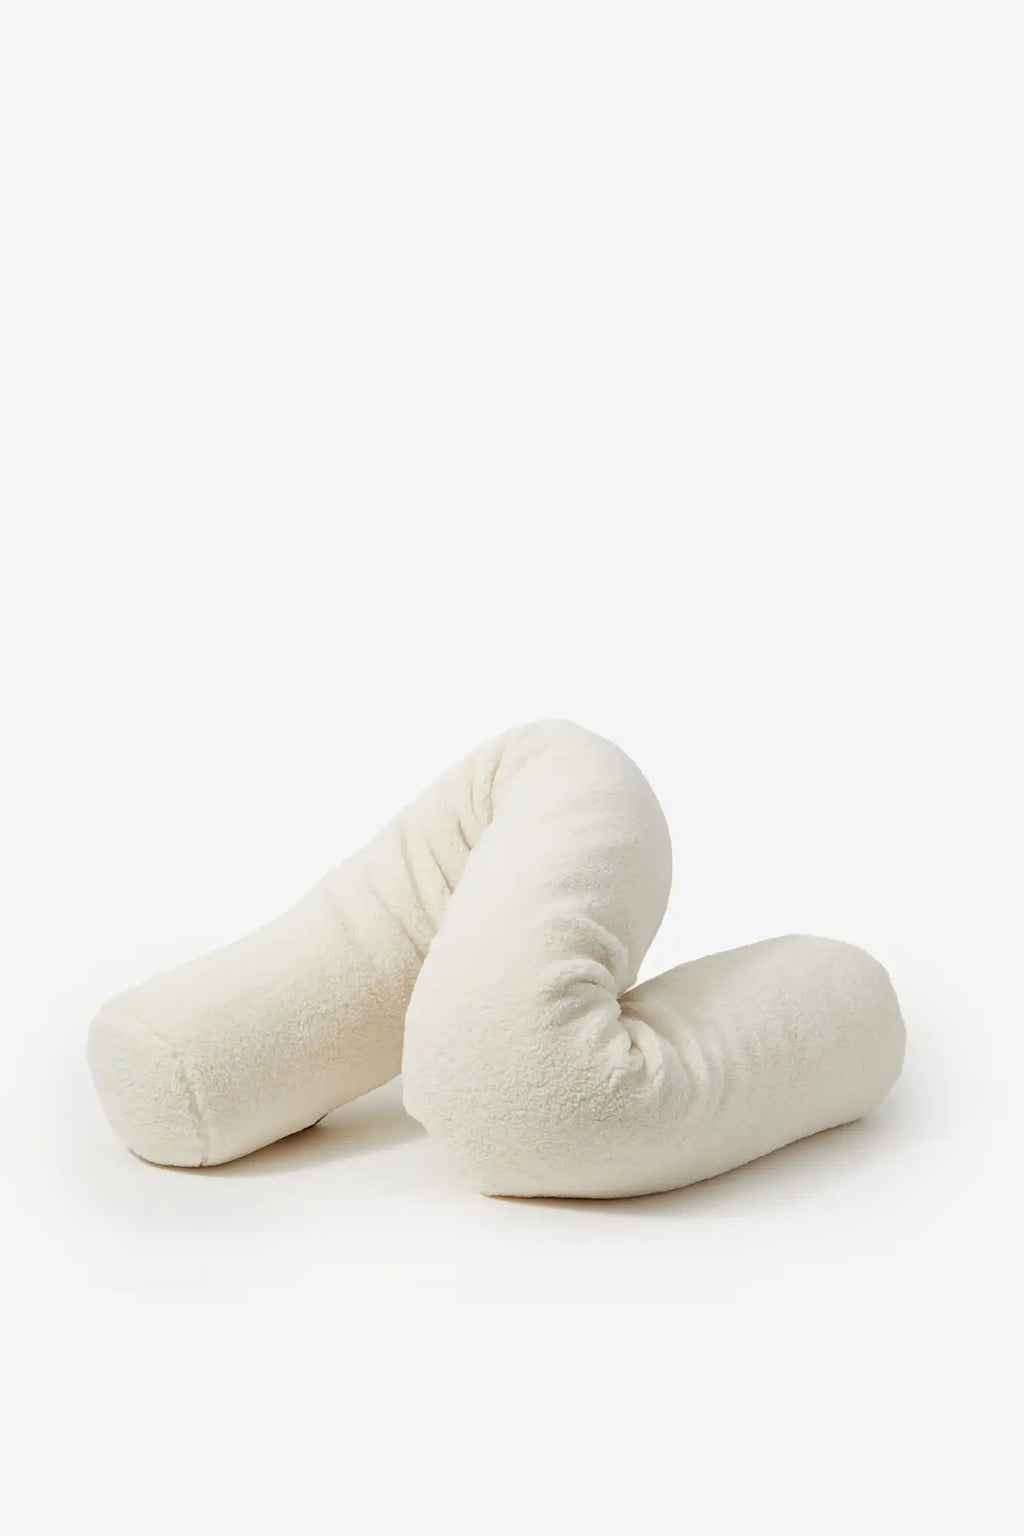 Wool Pregnancy Pillow, U-shaped